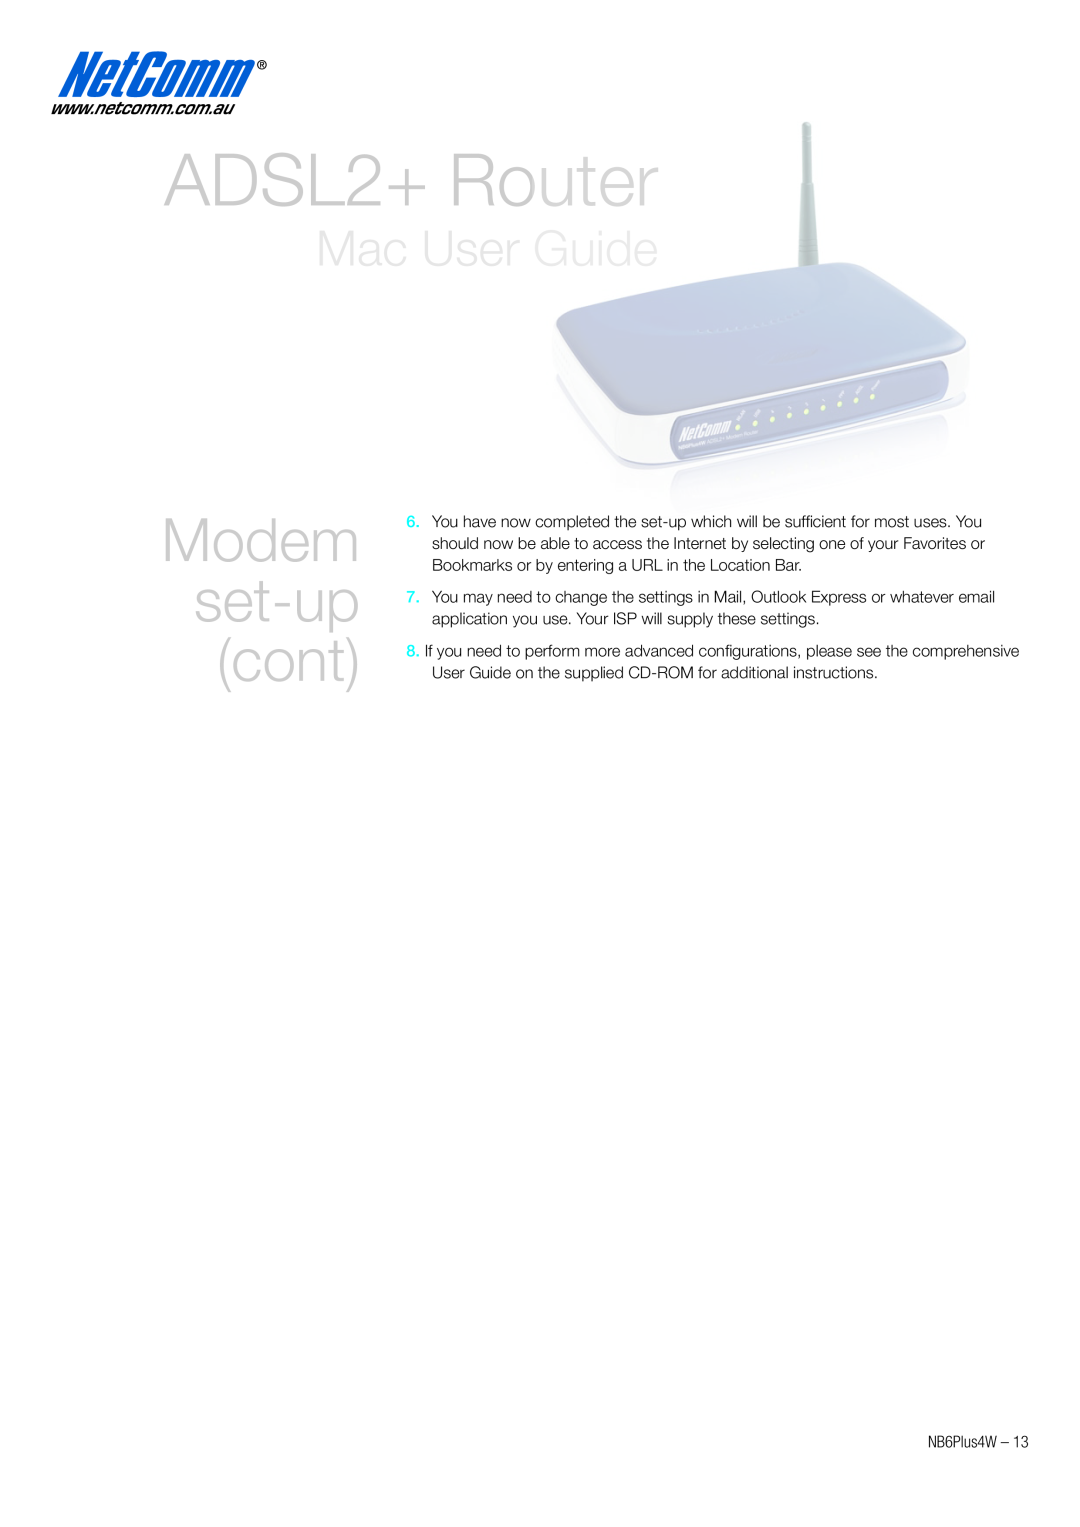 NetComm NB6PLUS4W quick start Modem set-up cont, ADSL2+ Router, Mac User Guide 